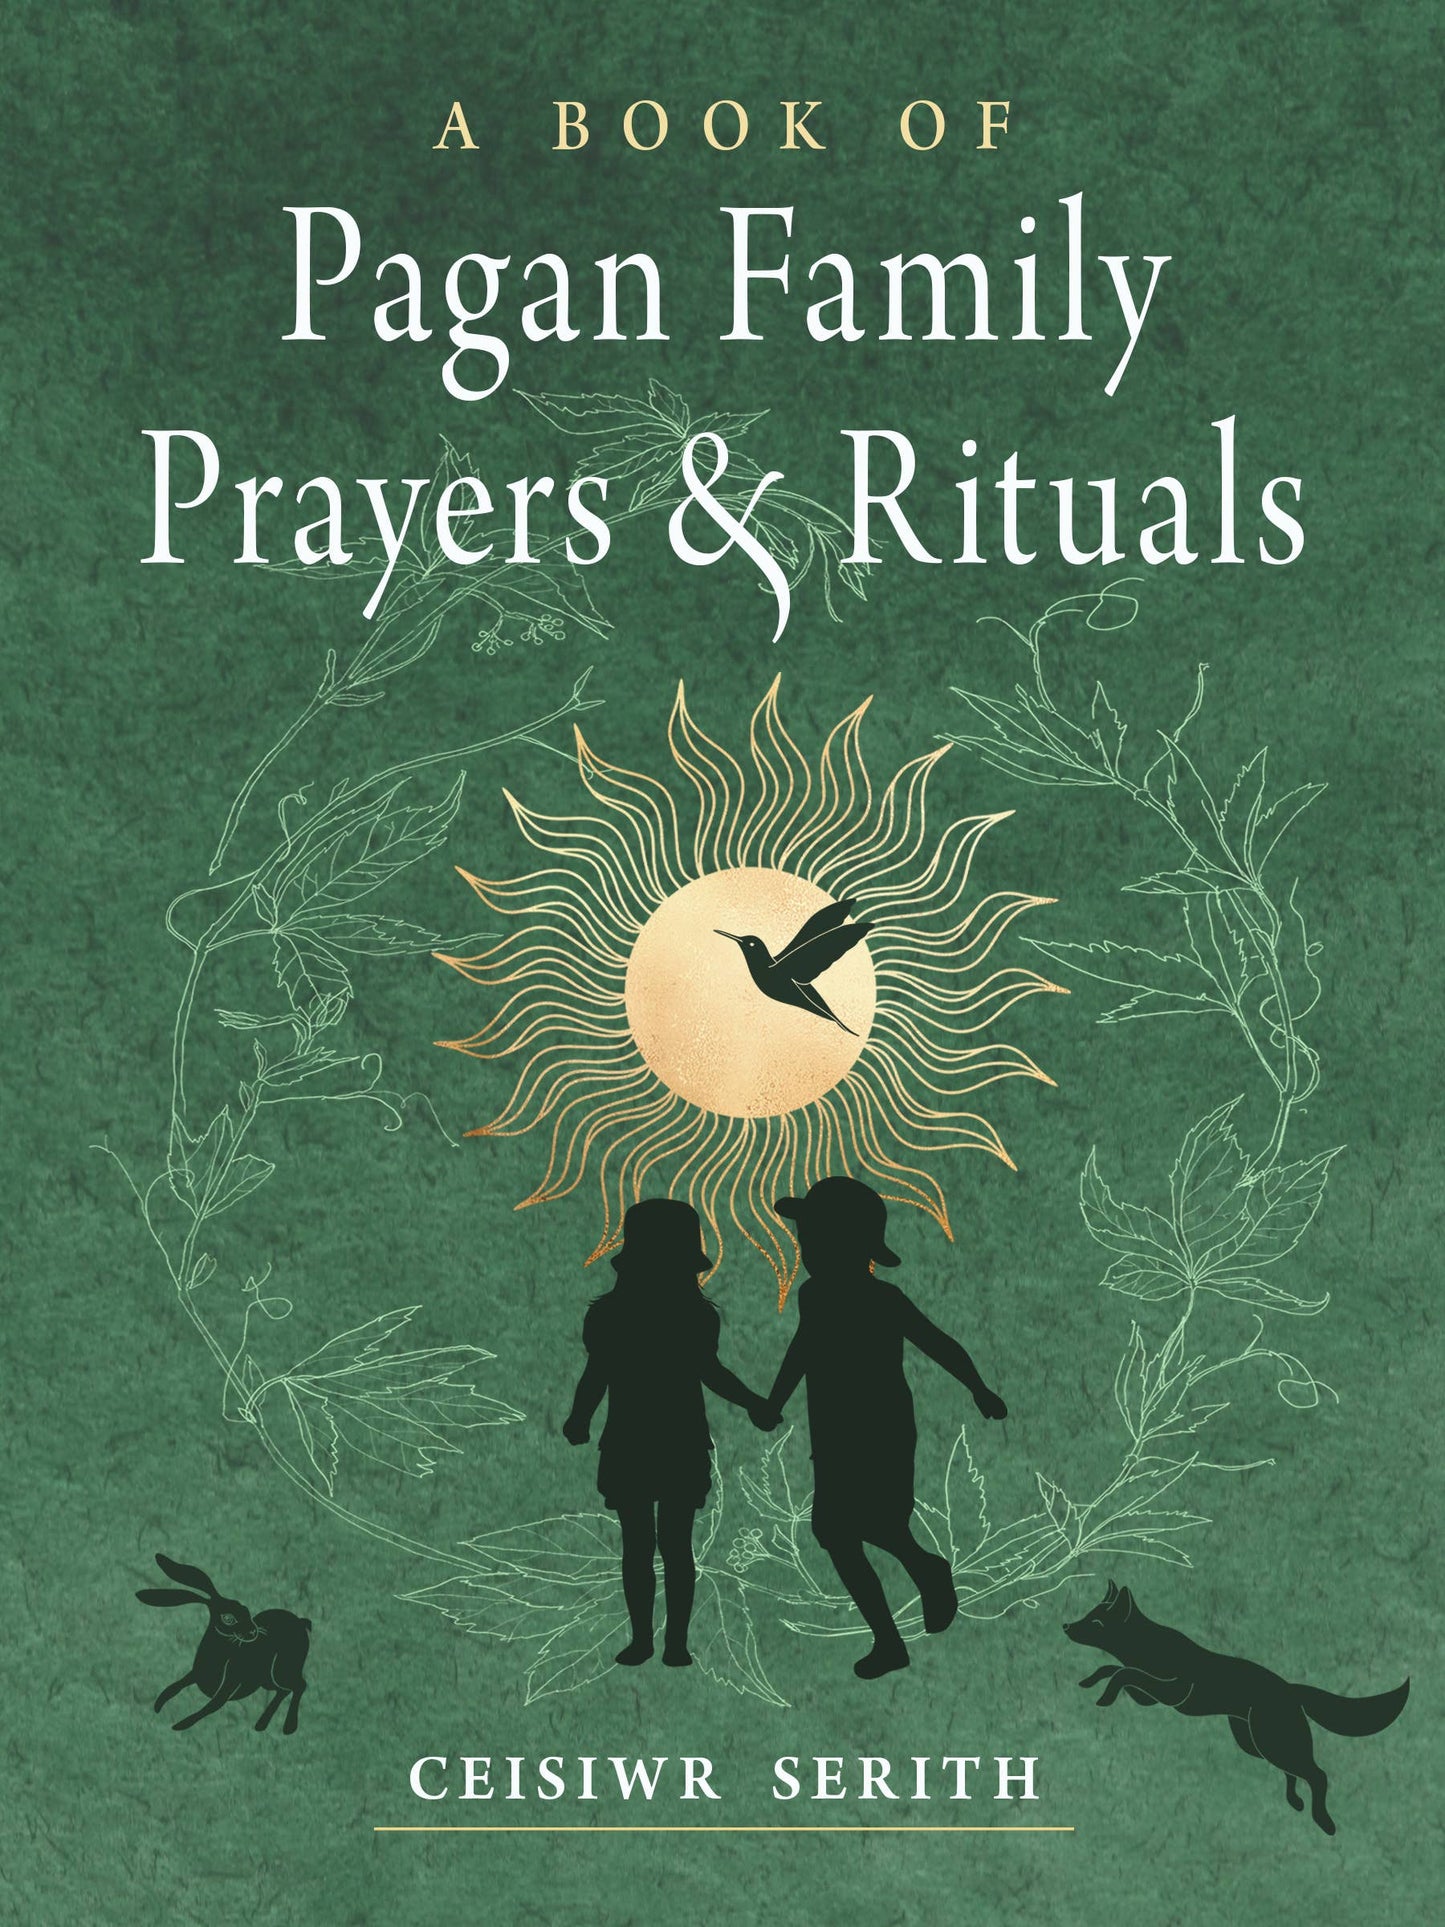 Pagan Family Book